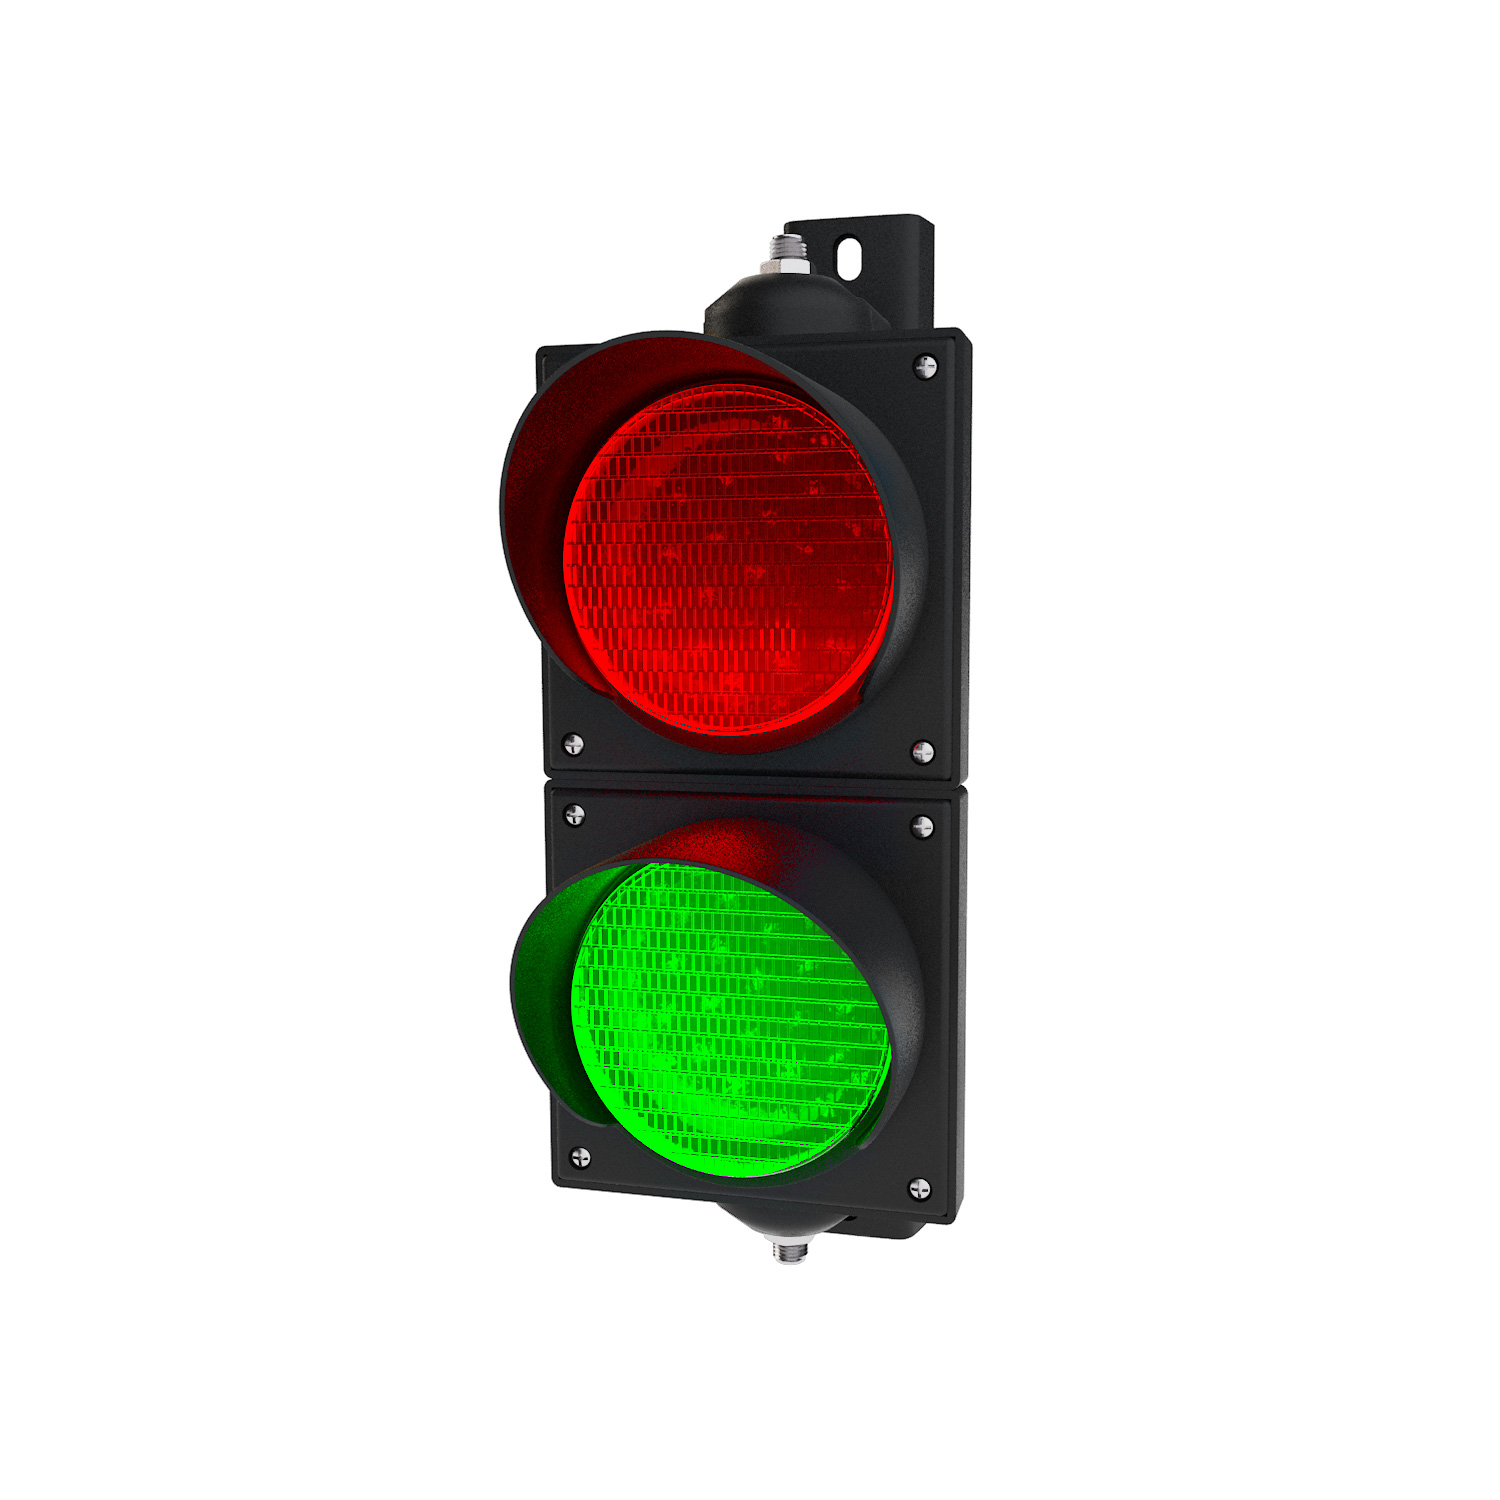 Ampel rot/grün, Ø 100 mm, kleiner als Verkehrsampeln | Ampeln rot/grün ...